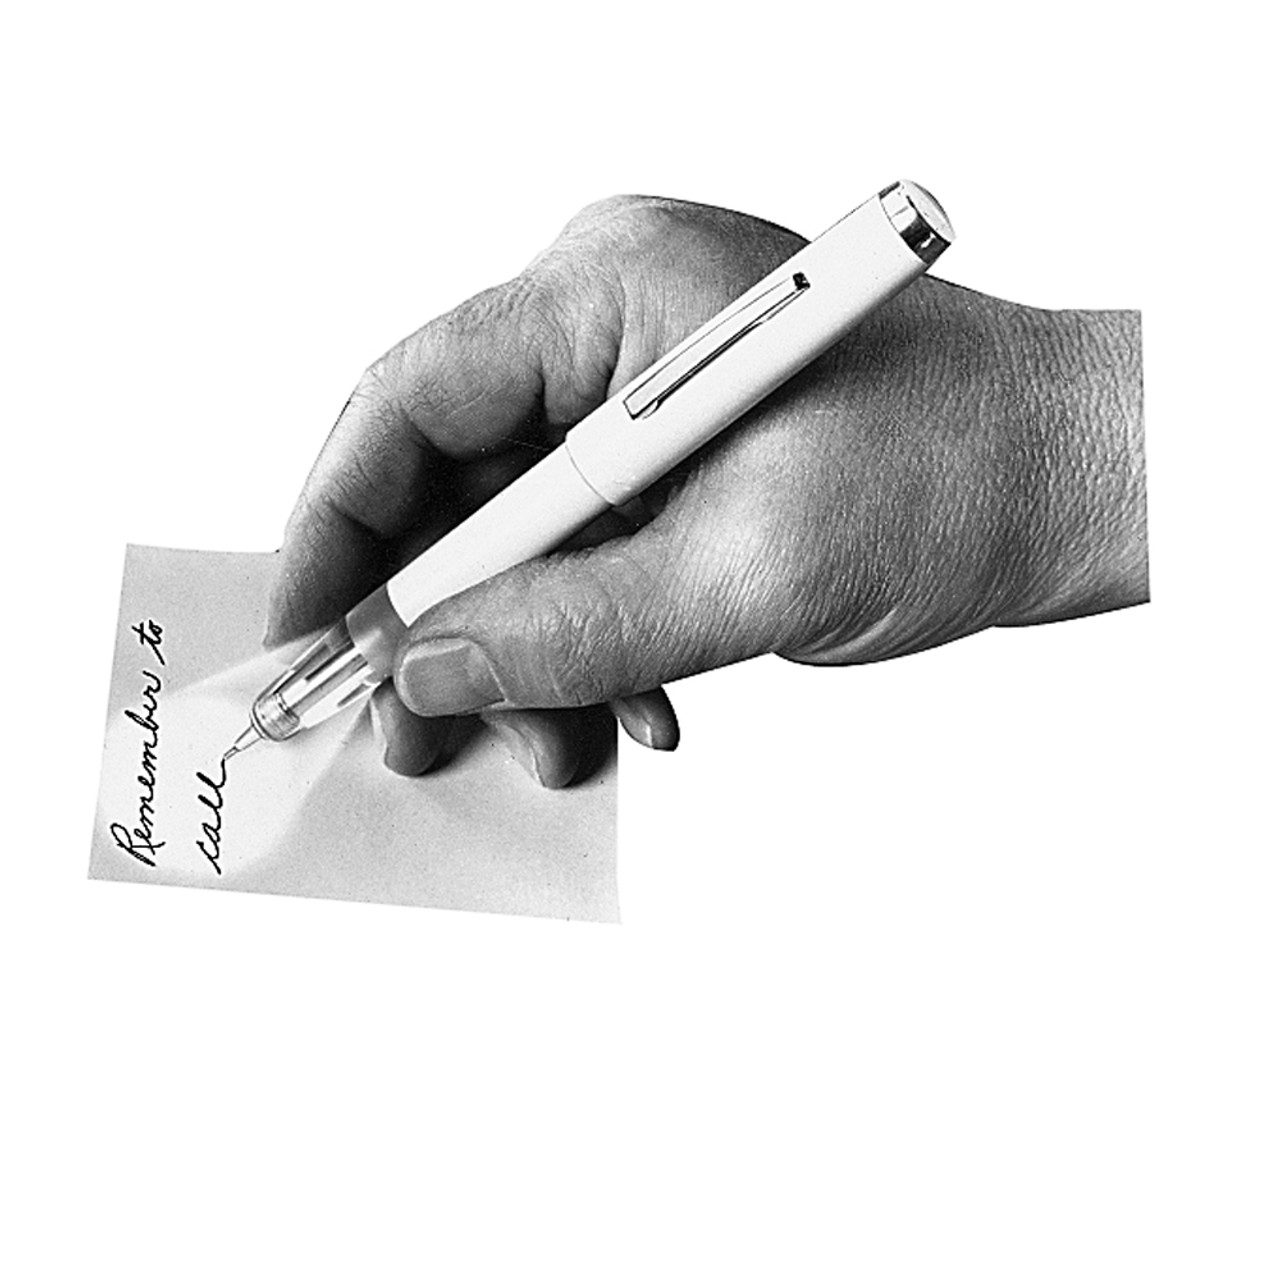 Nitewriter Lighted Pen